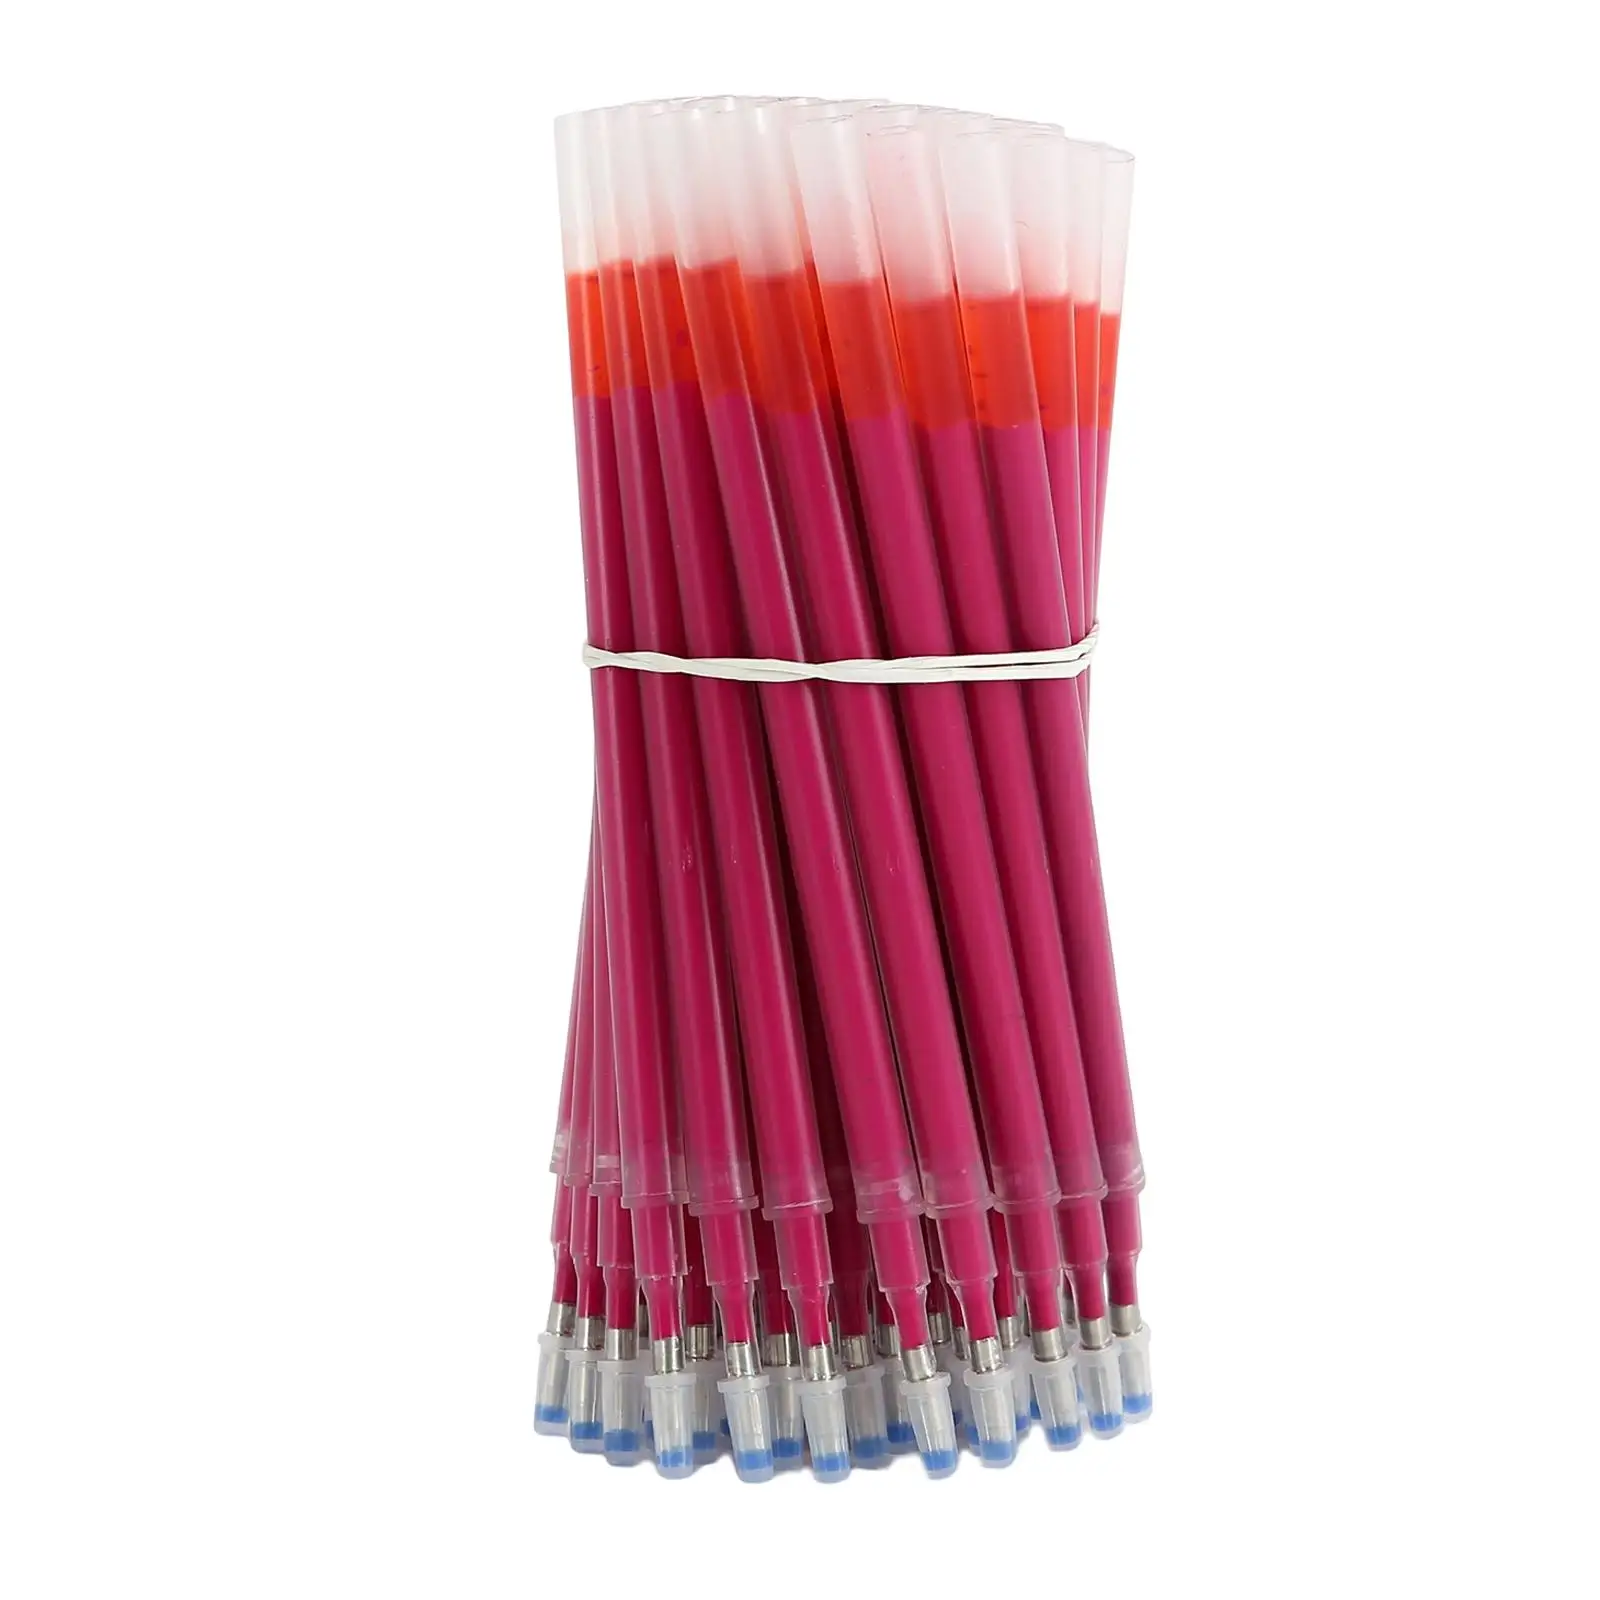 50 Pieces Heat Erasable Pen Refills Fabric Marking Pen for Dressmaking